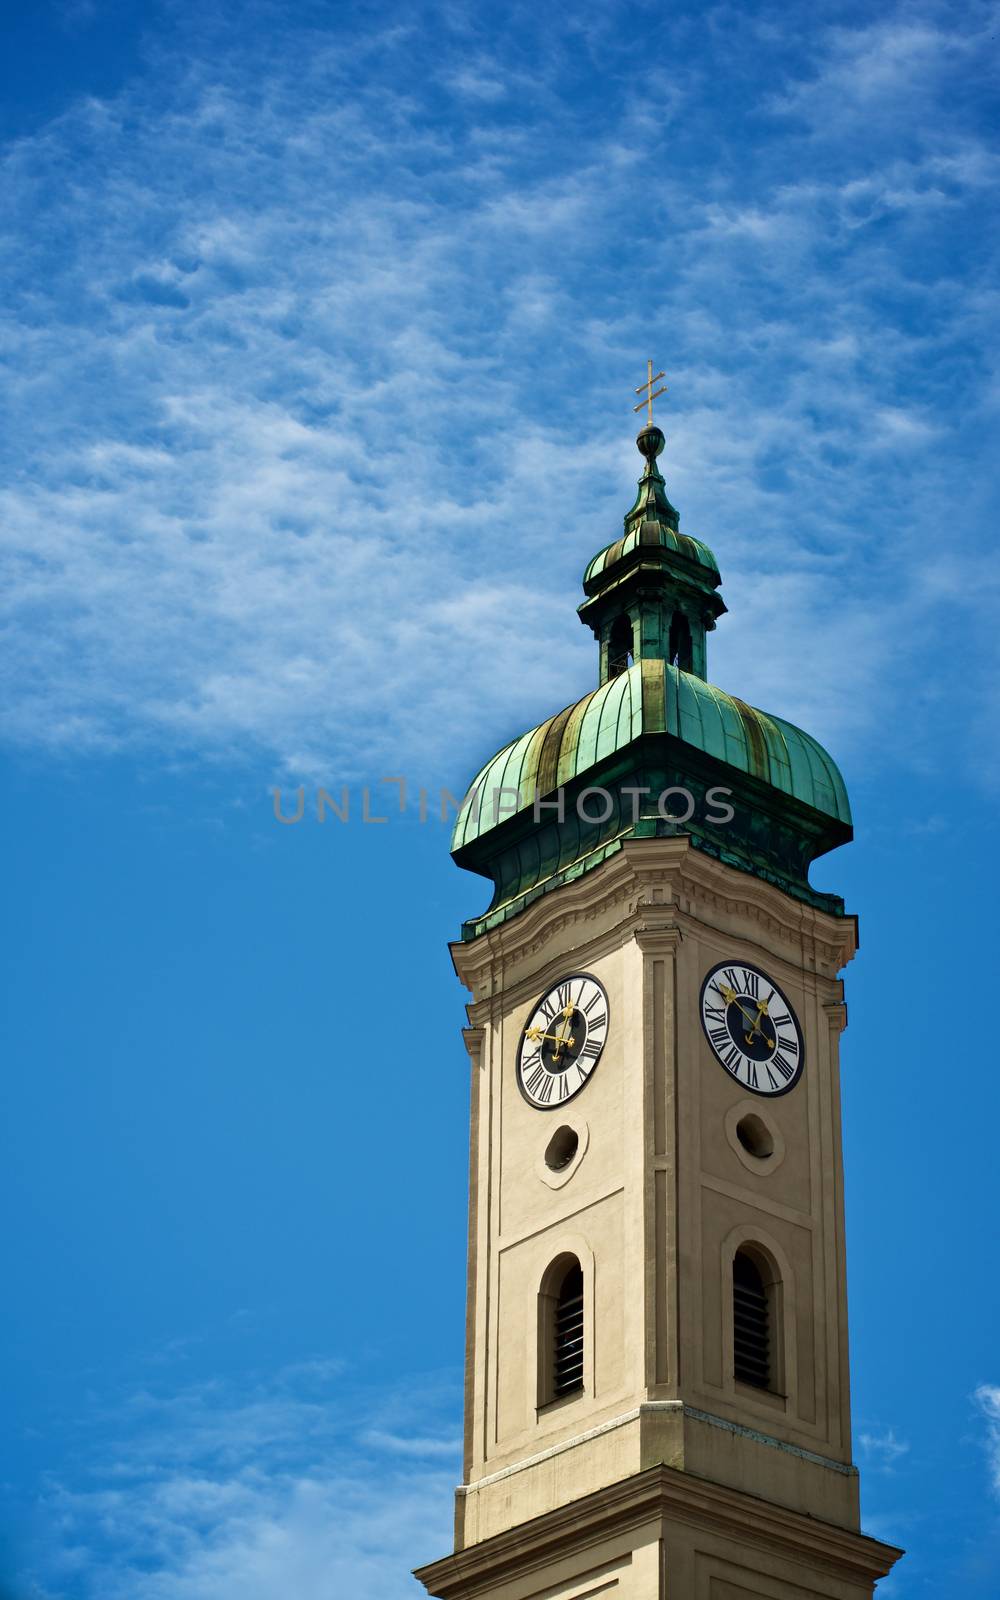 Clock Tower Heilig Geist Kirche against Blue Cloudy Sky Outdoors. Munich, Germany